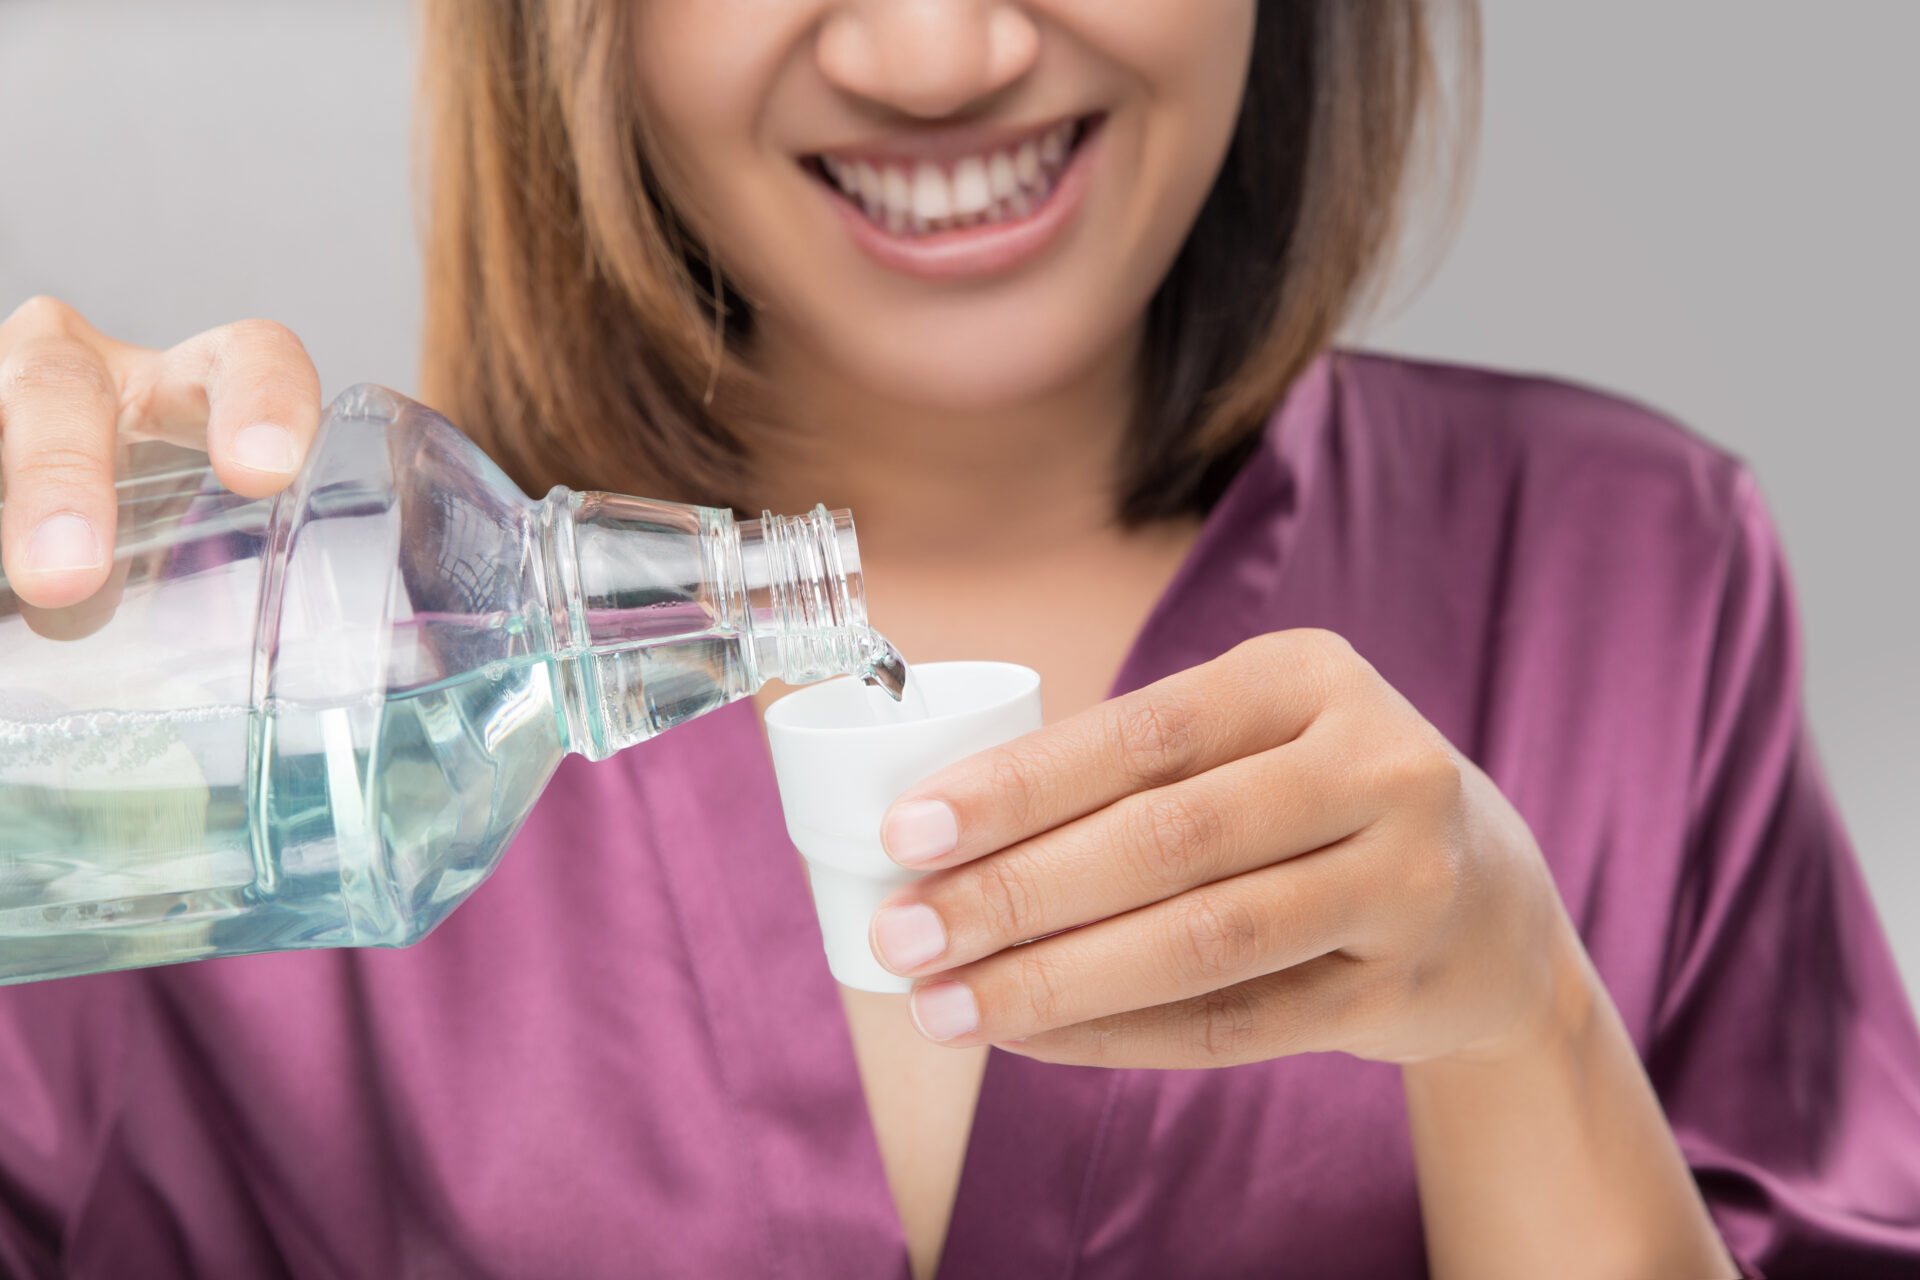 Woman Using Mouthwash After Brushing, Portrait  Hands Pouring Mouthwash Into Bottle Cap, Dental Health Concepts